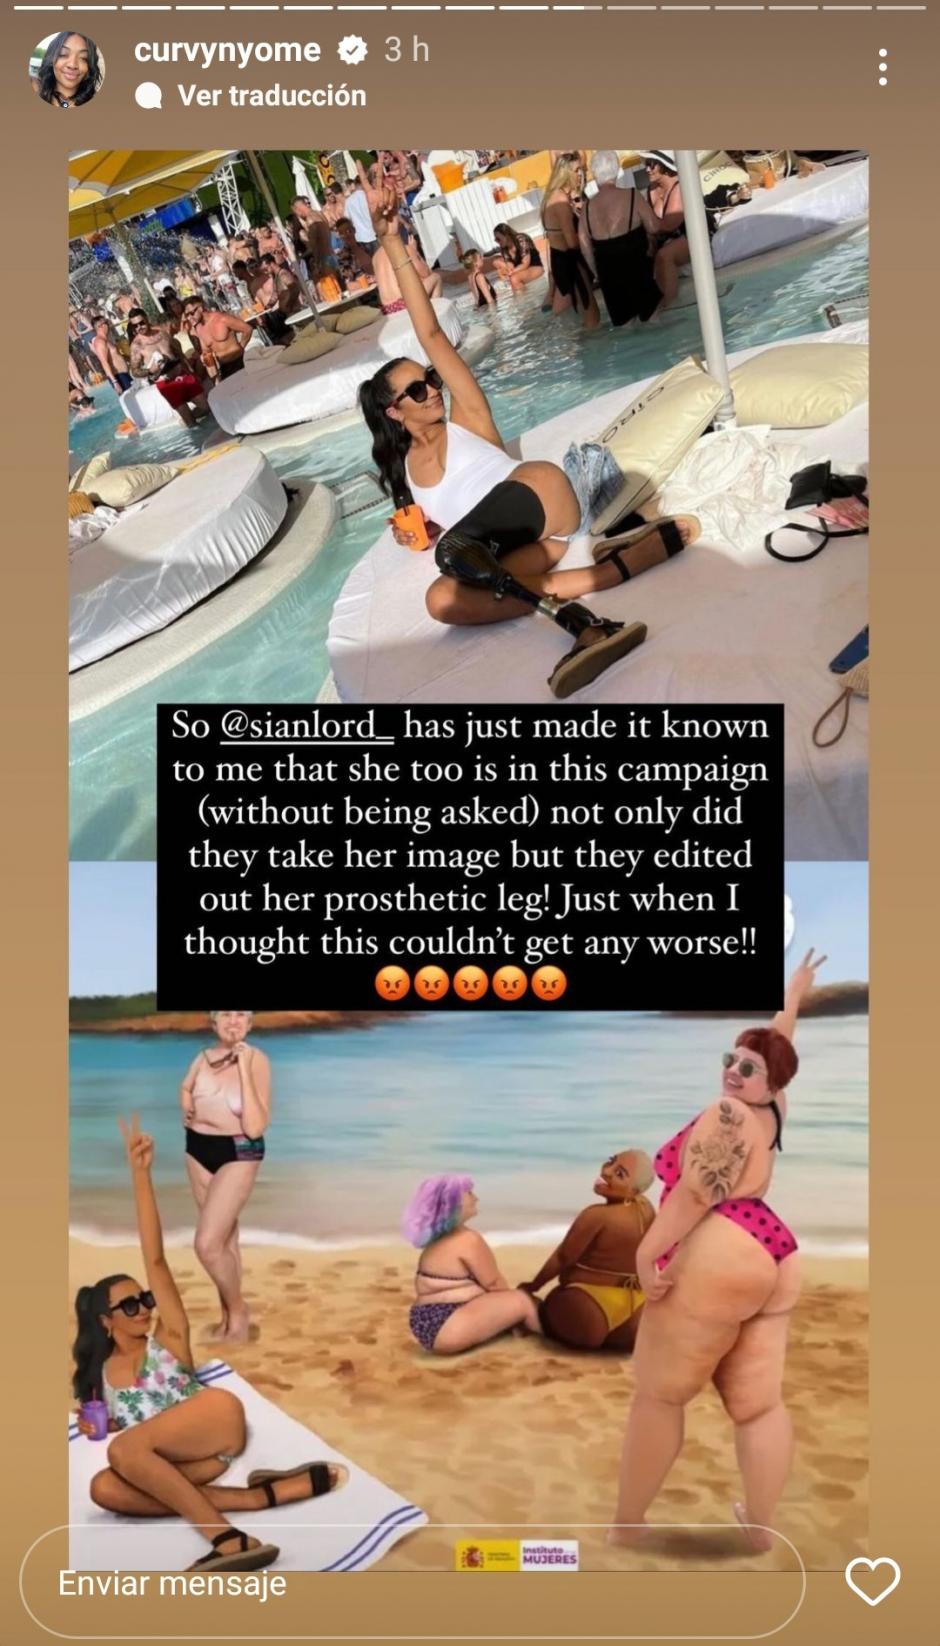 La queja de la modelo a través de Instagram